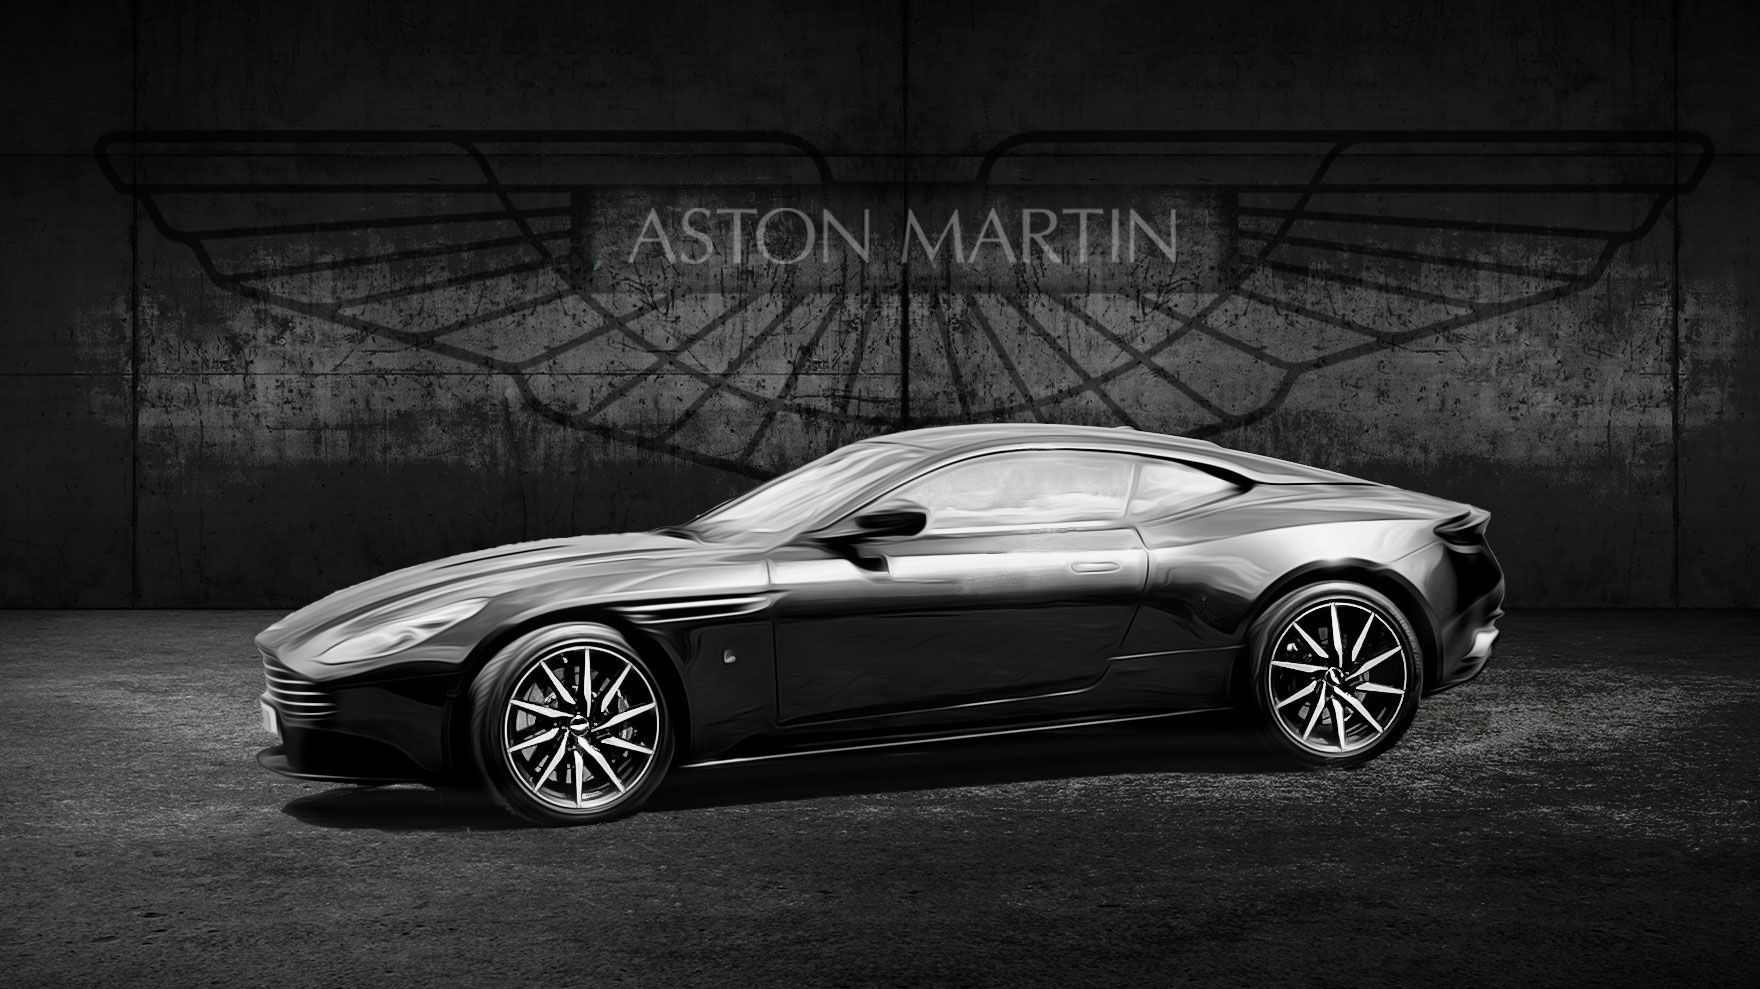 Aston Martin DB11 Portrait